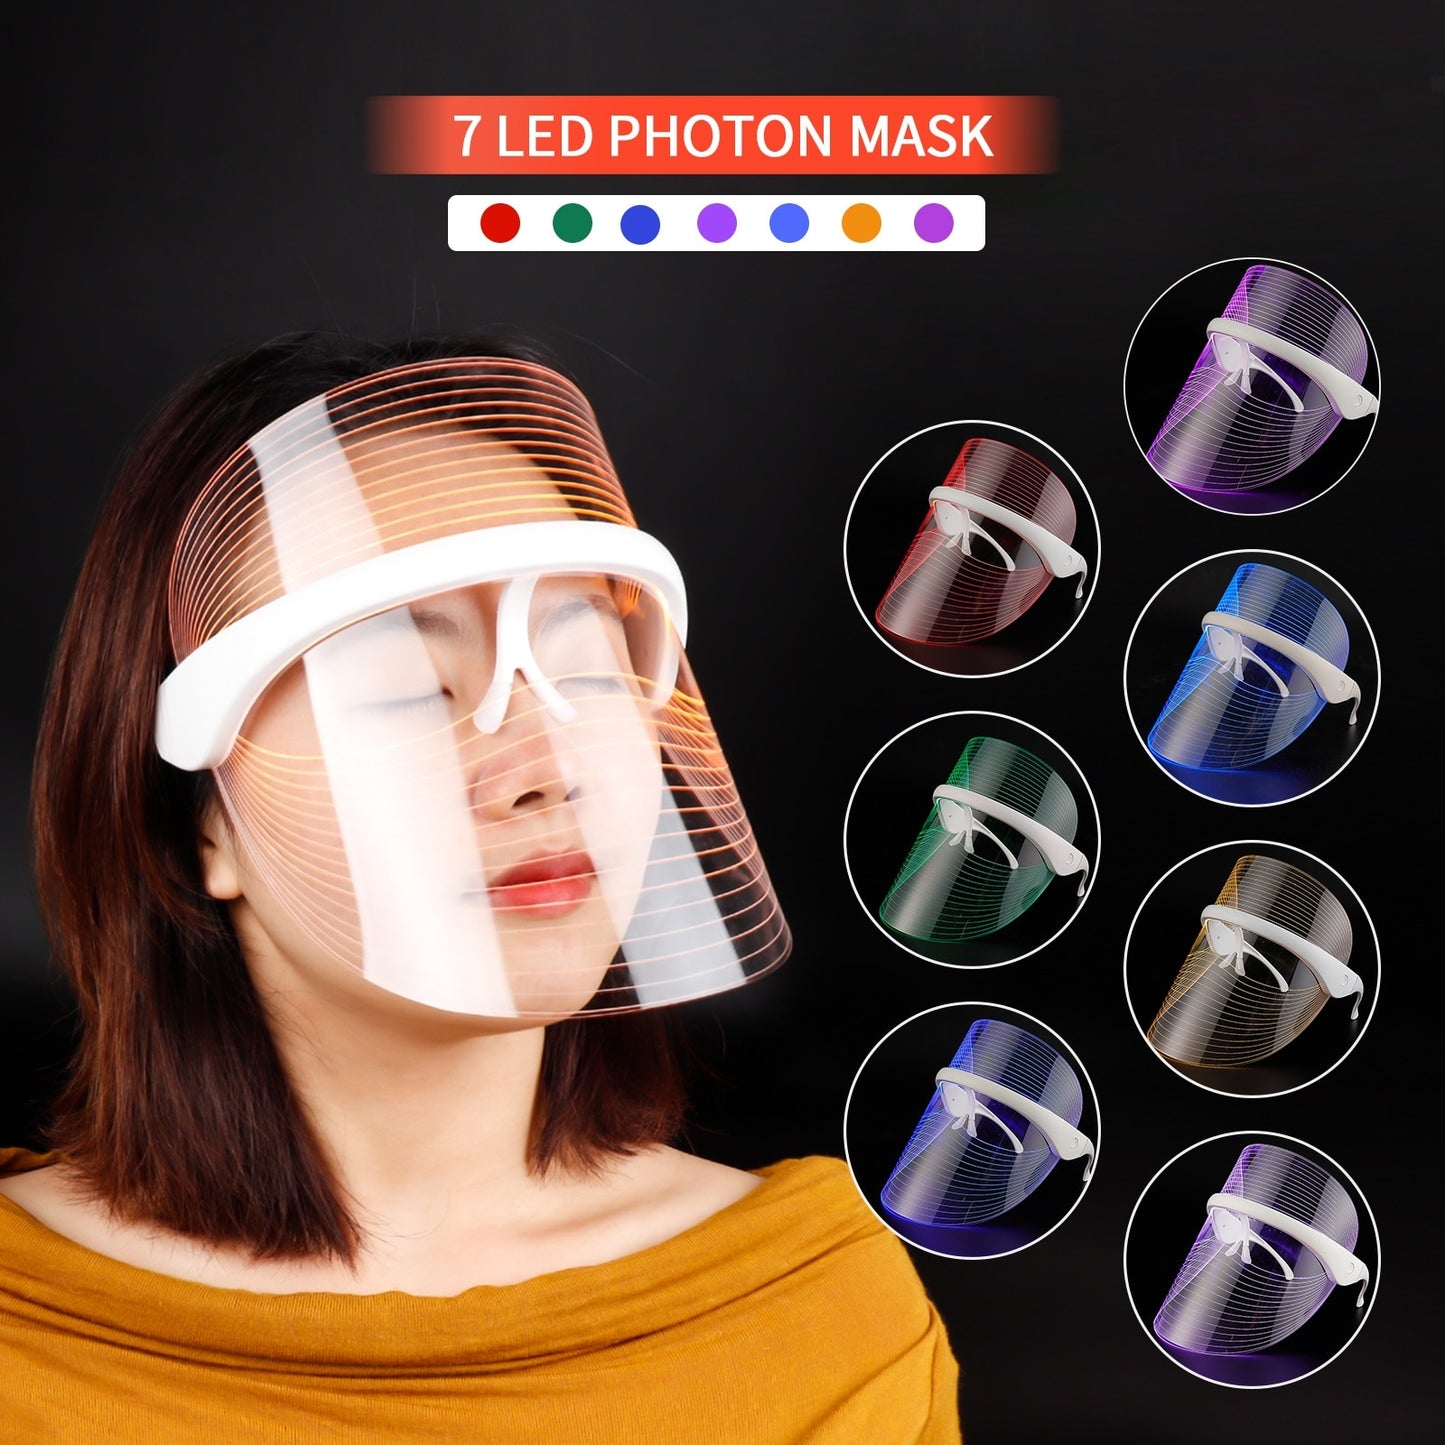 LITEGLOW 7 Colors LED Rejuvenation Face Mask